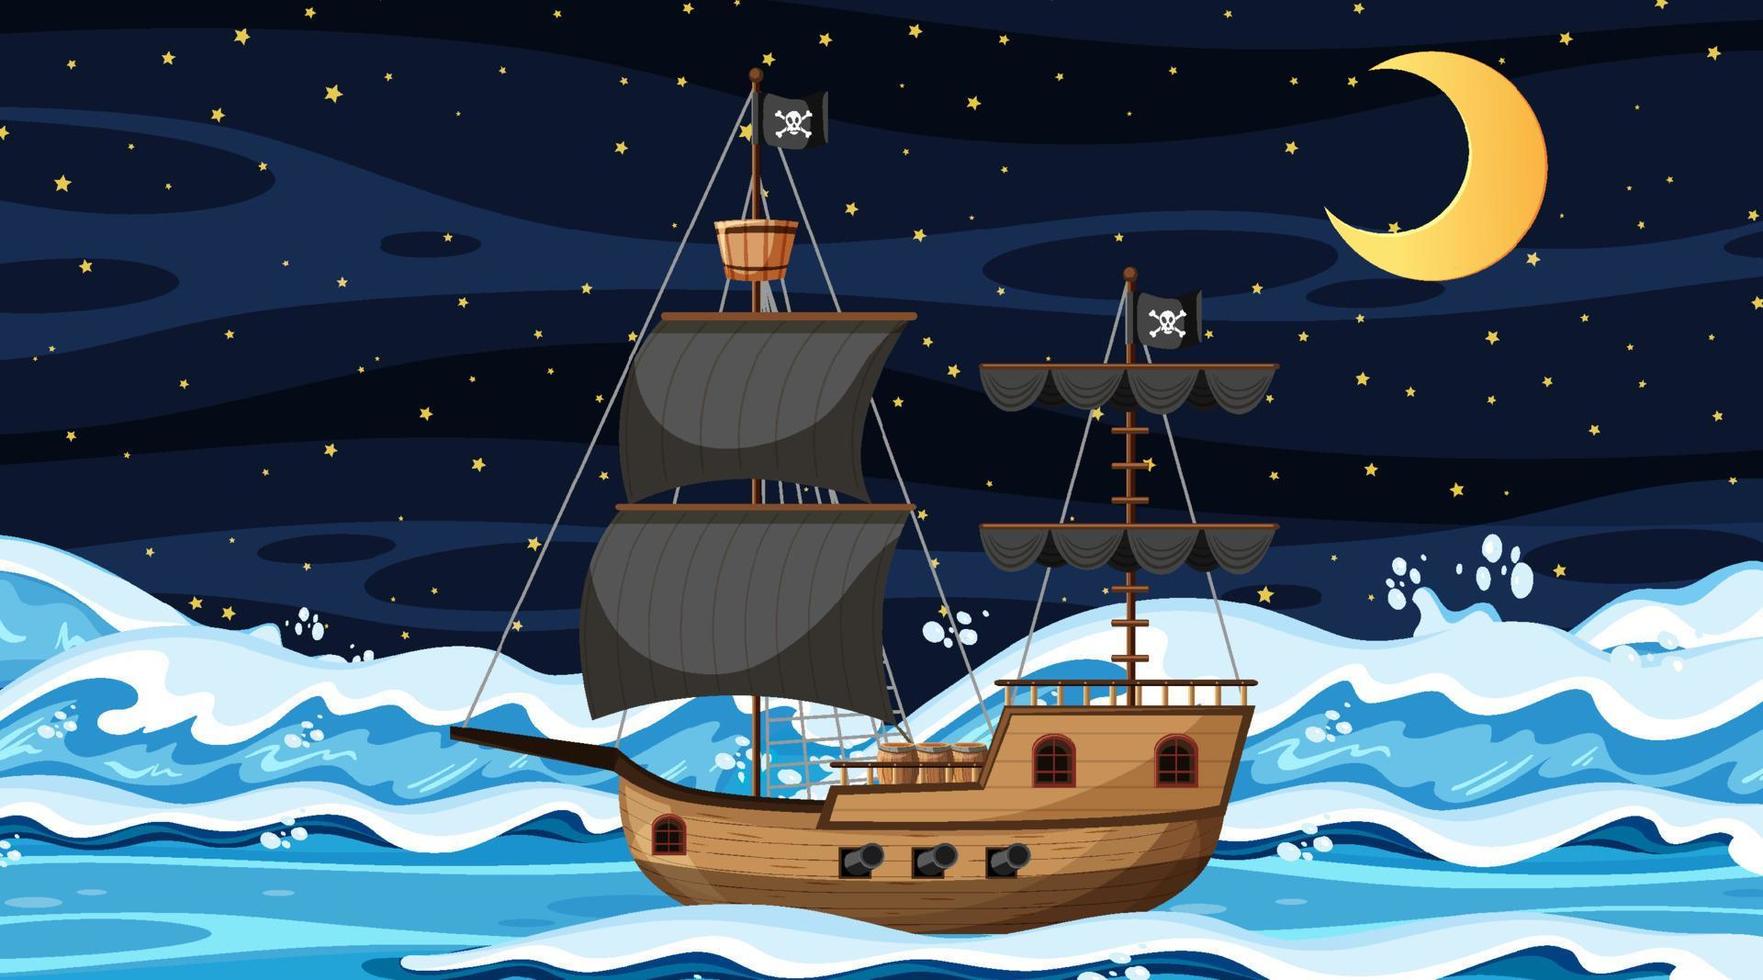 Ozean mit Piratenschiff bei Nachtszene im Karikaturstil vektor